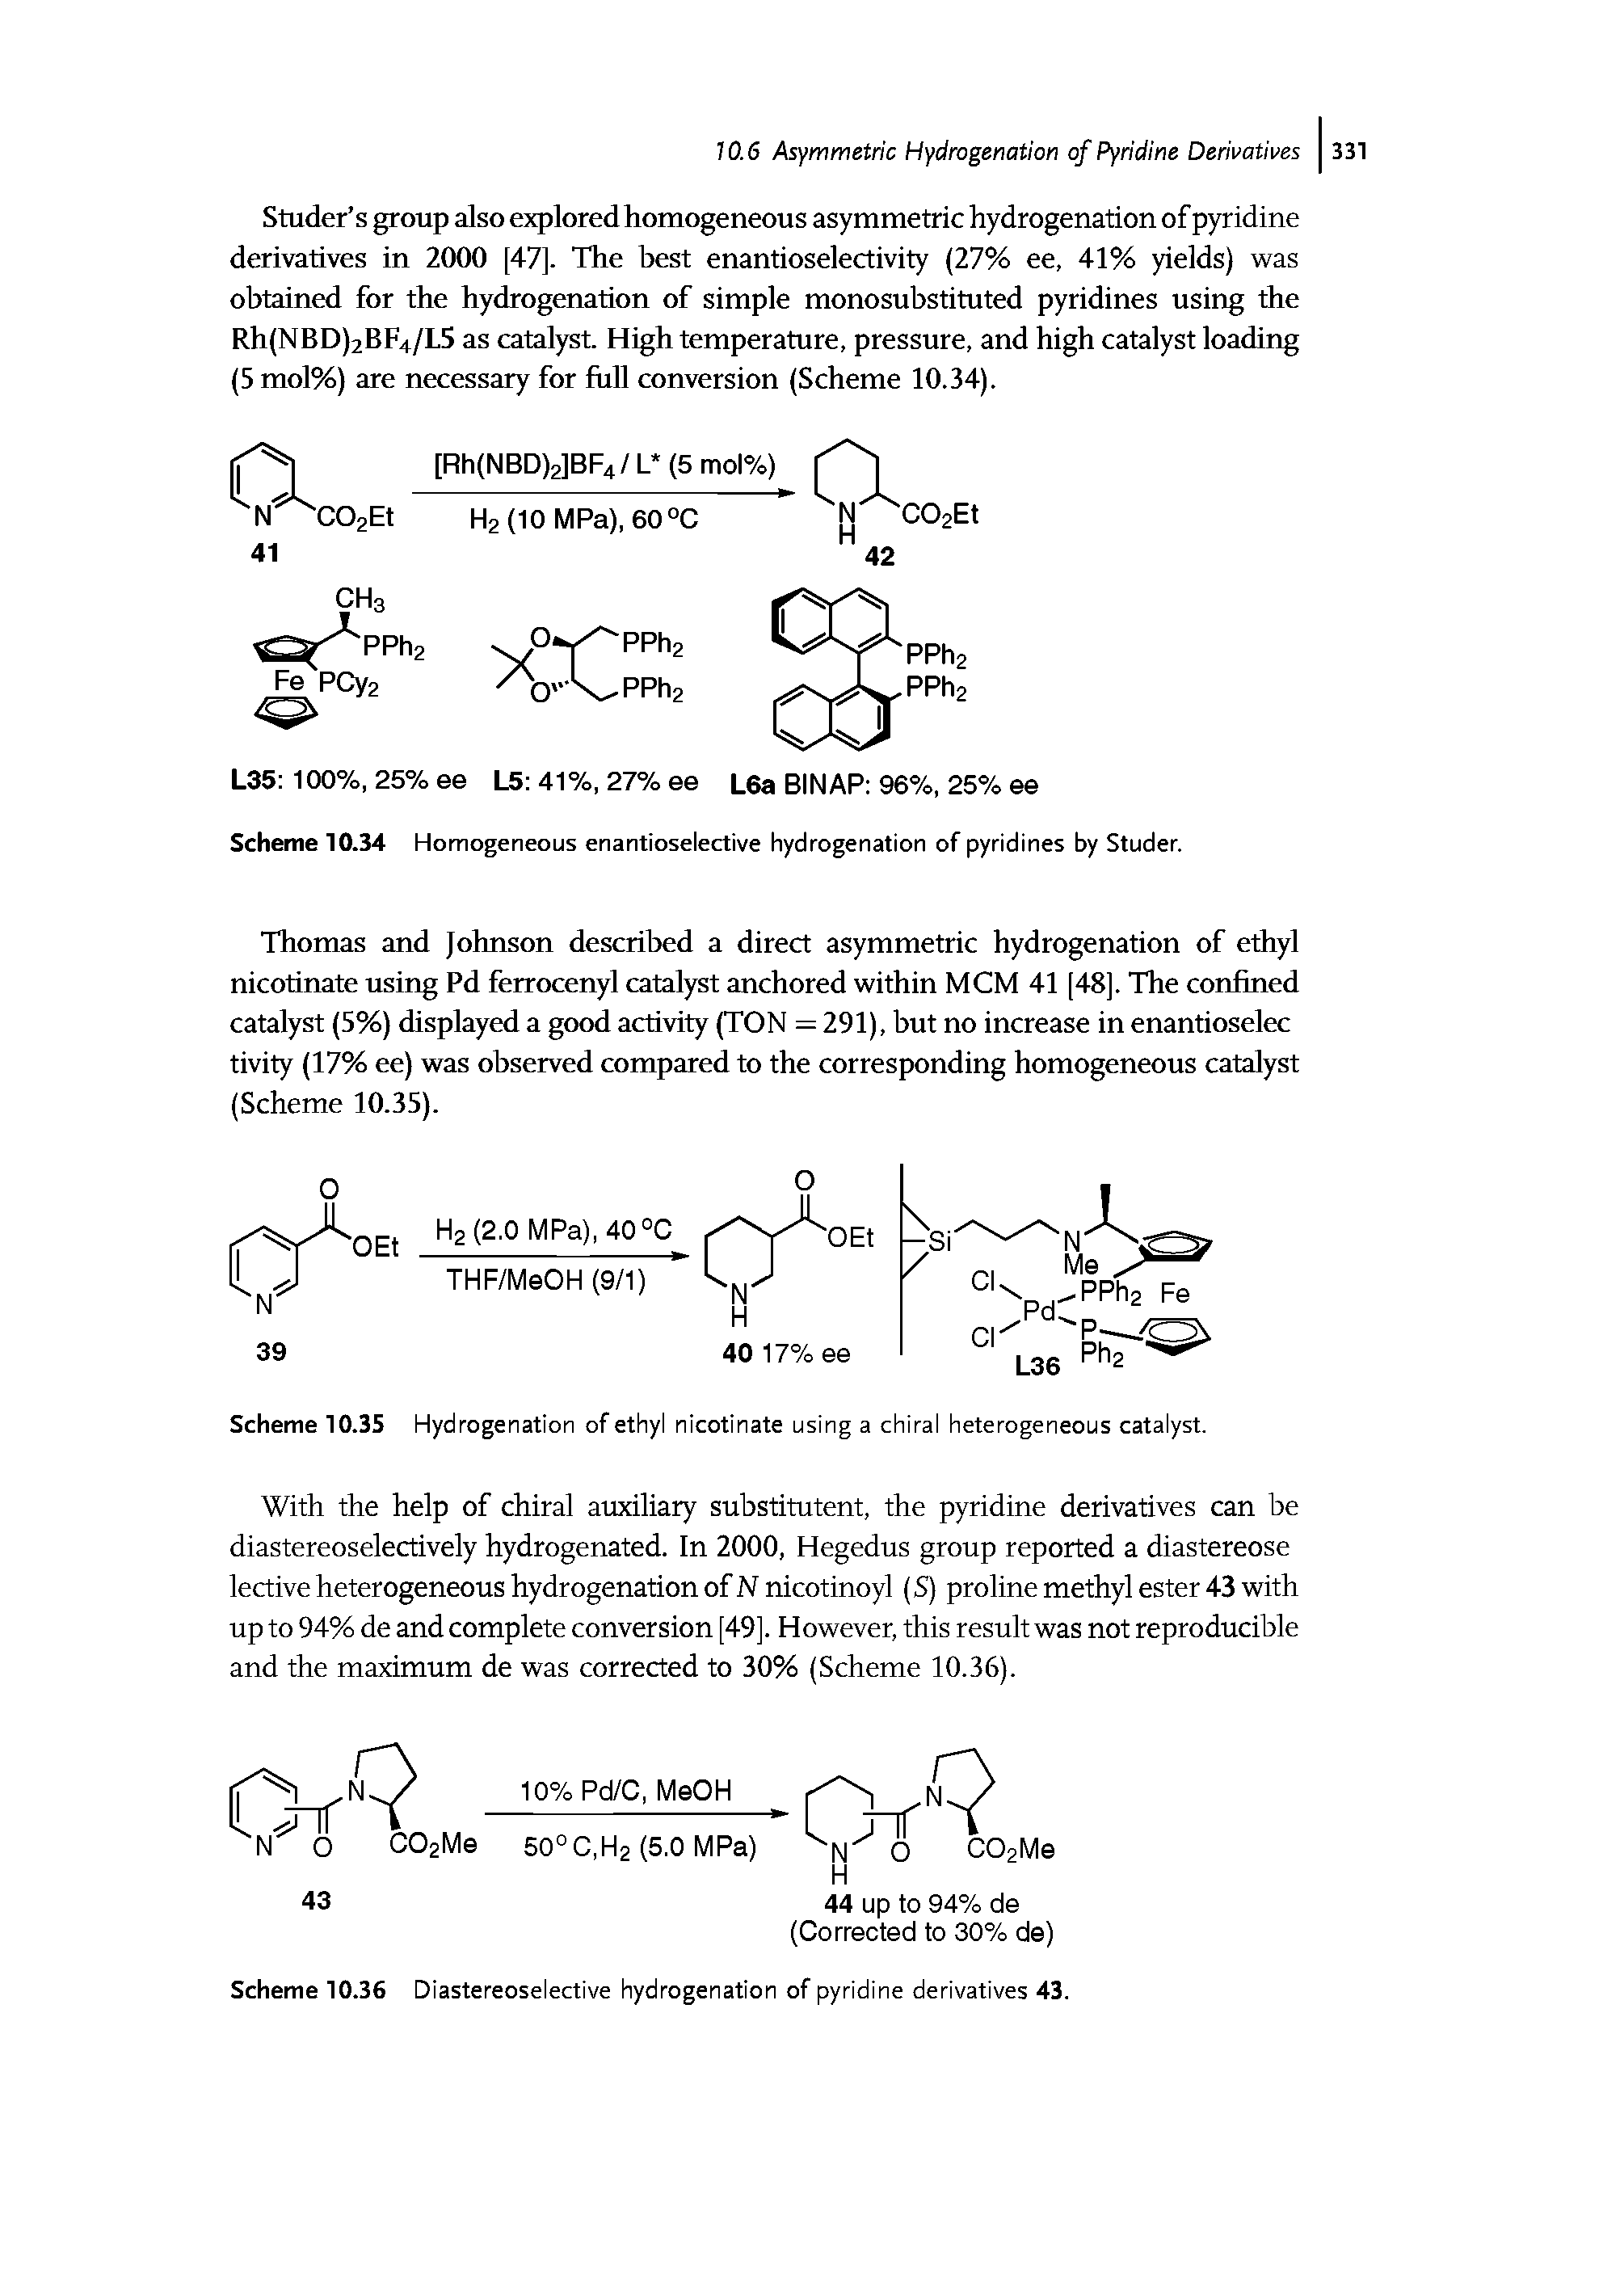 Scheme 10.3S Hydrogenation of ethyl nicotinate using a chiral heterogeneous catalyst.